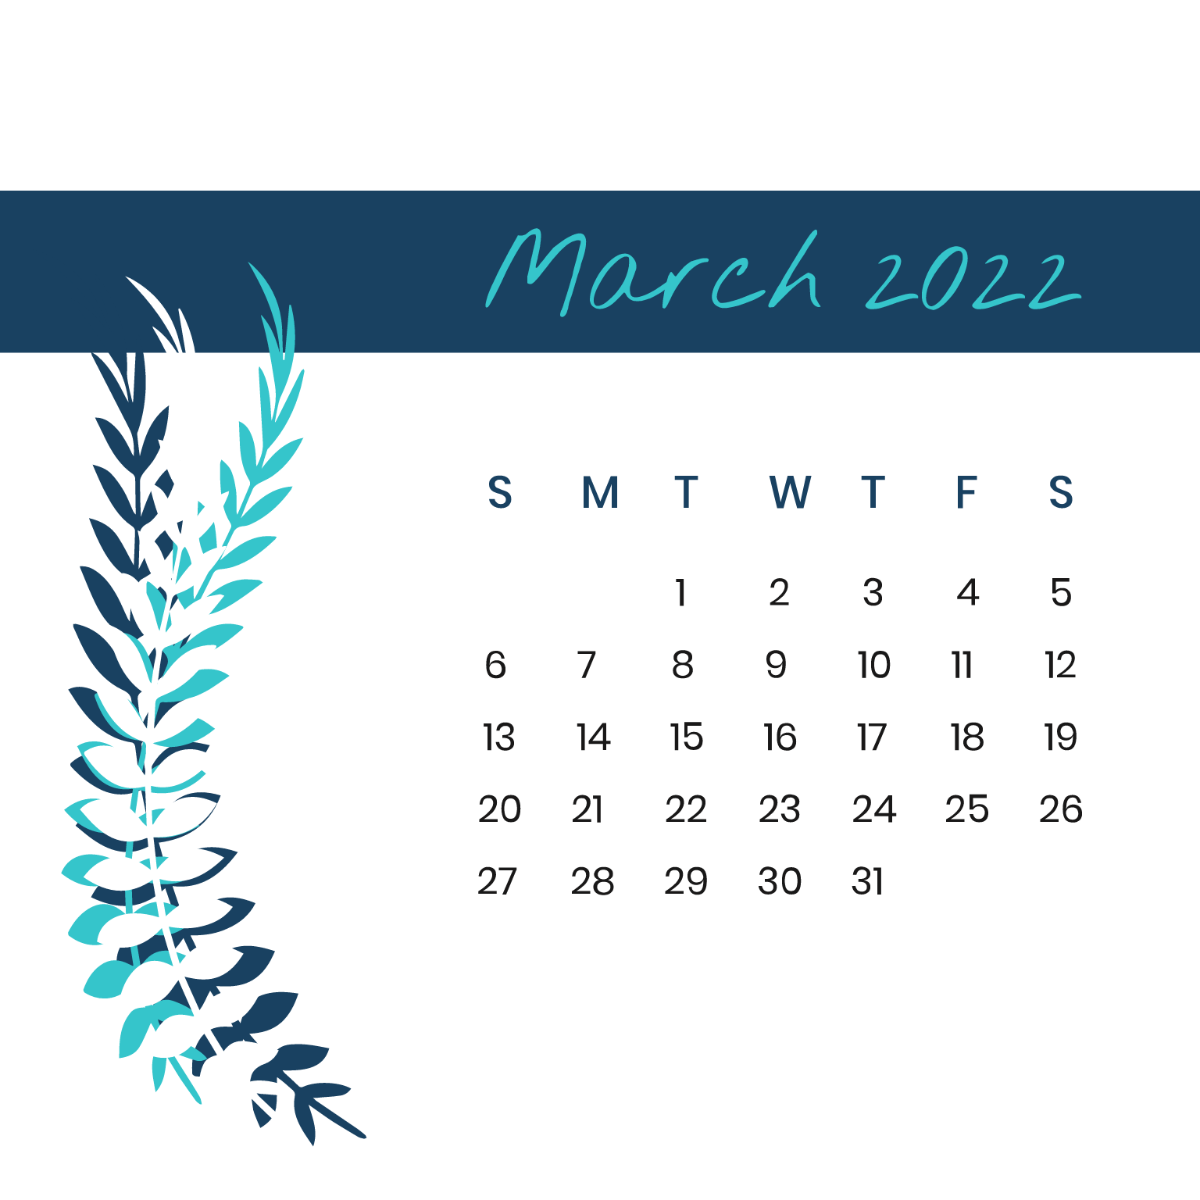 March 2022 Wall Calendar Vector Template